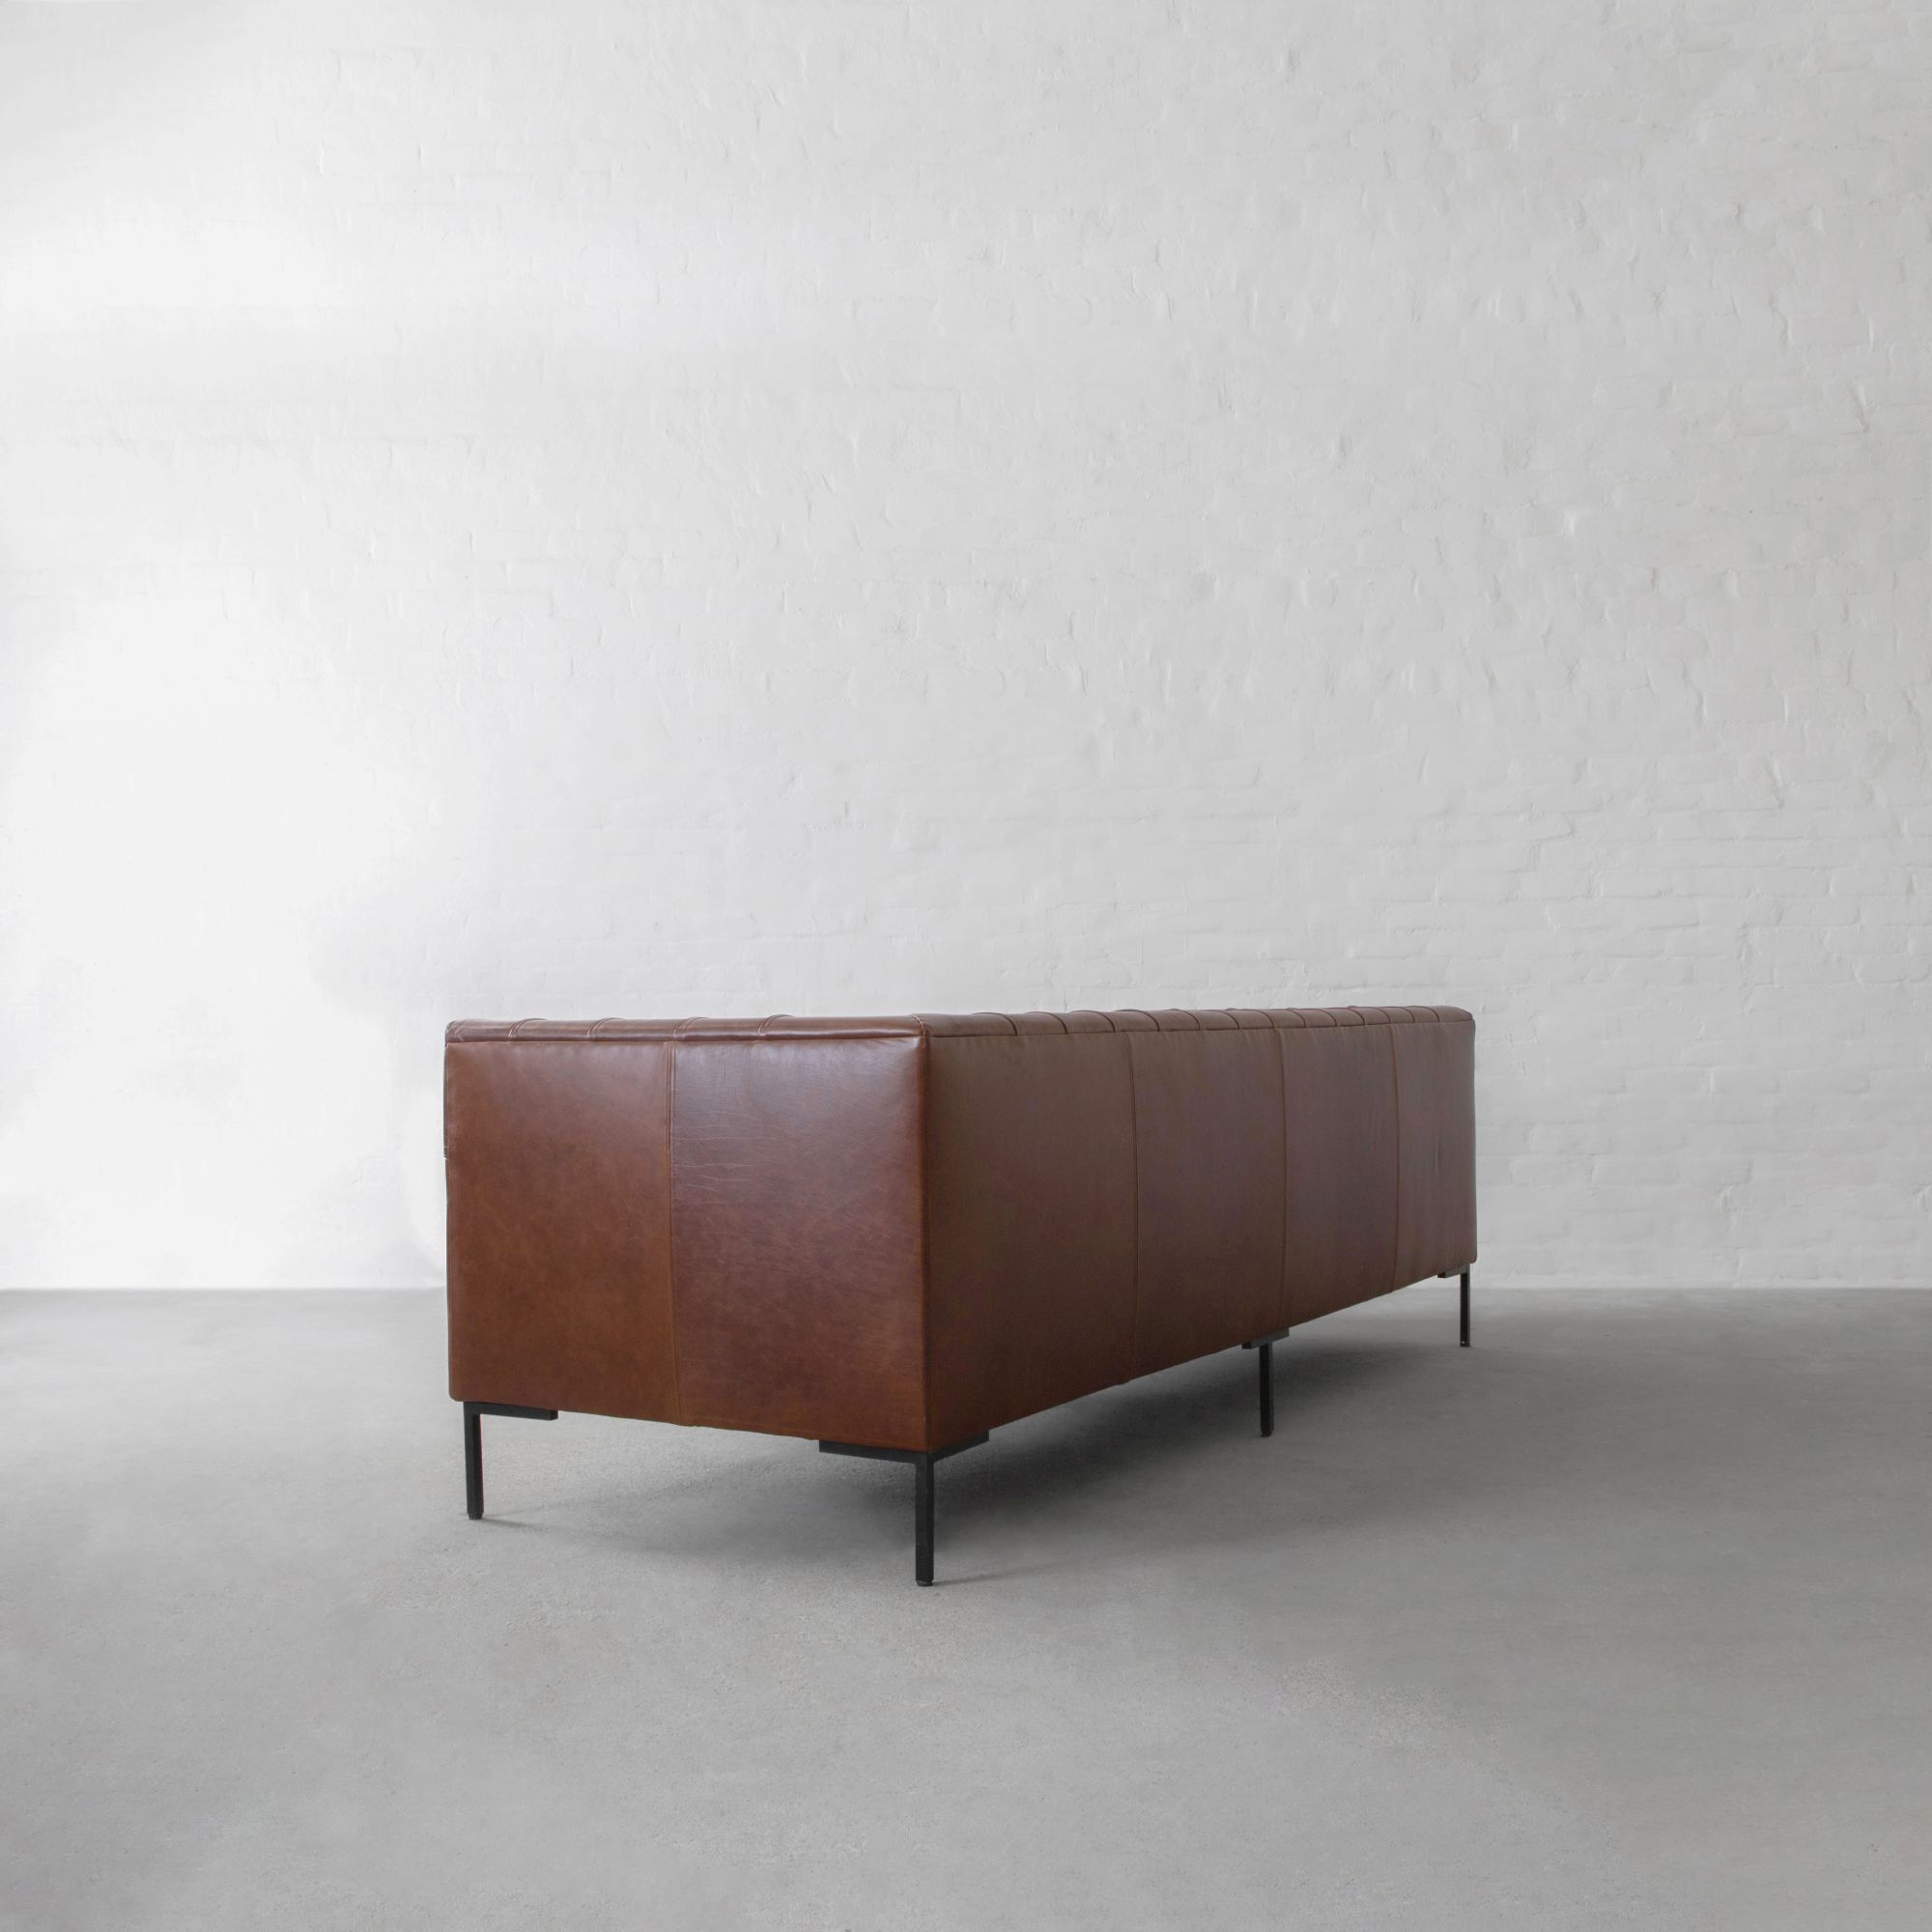 Lisbon Leather Sofa Collection